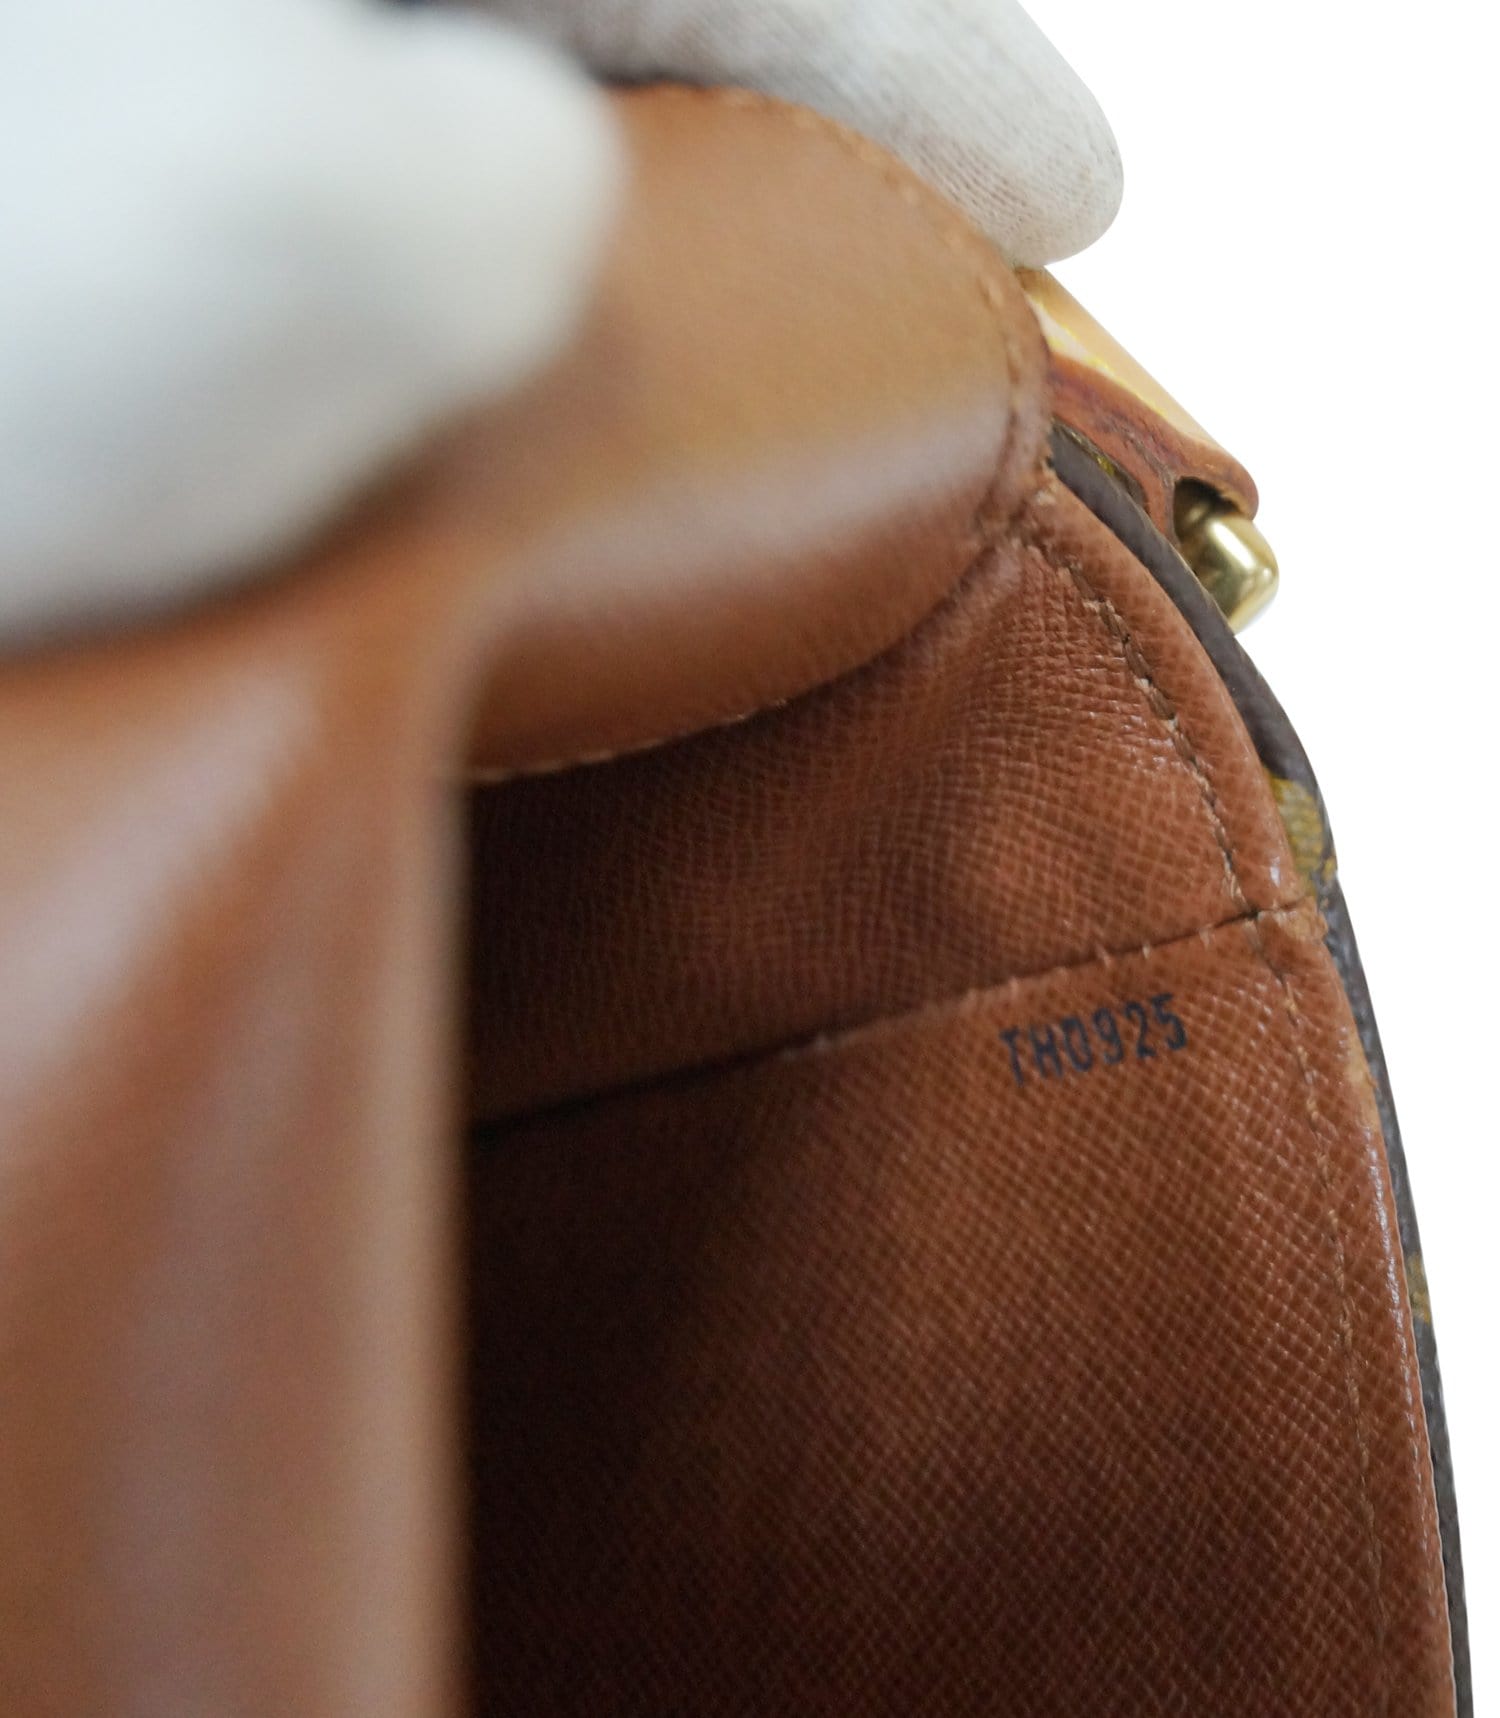 Louis Vuitton Chantilly Shoulder bag 398600